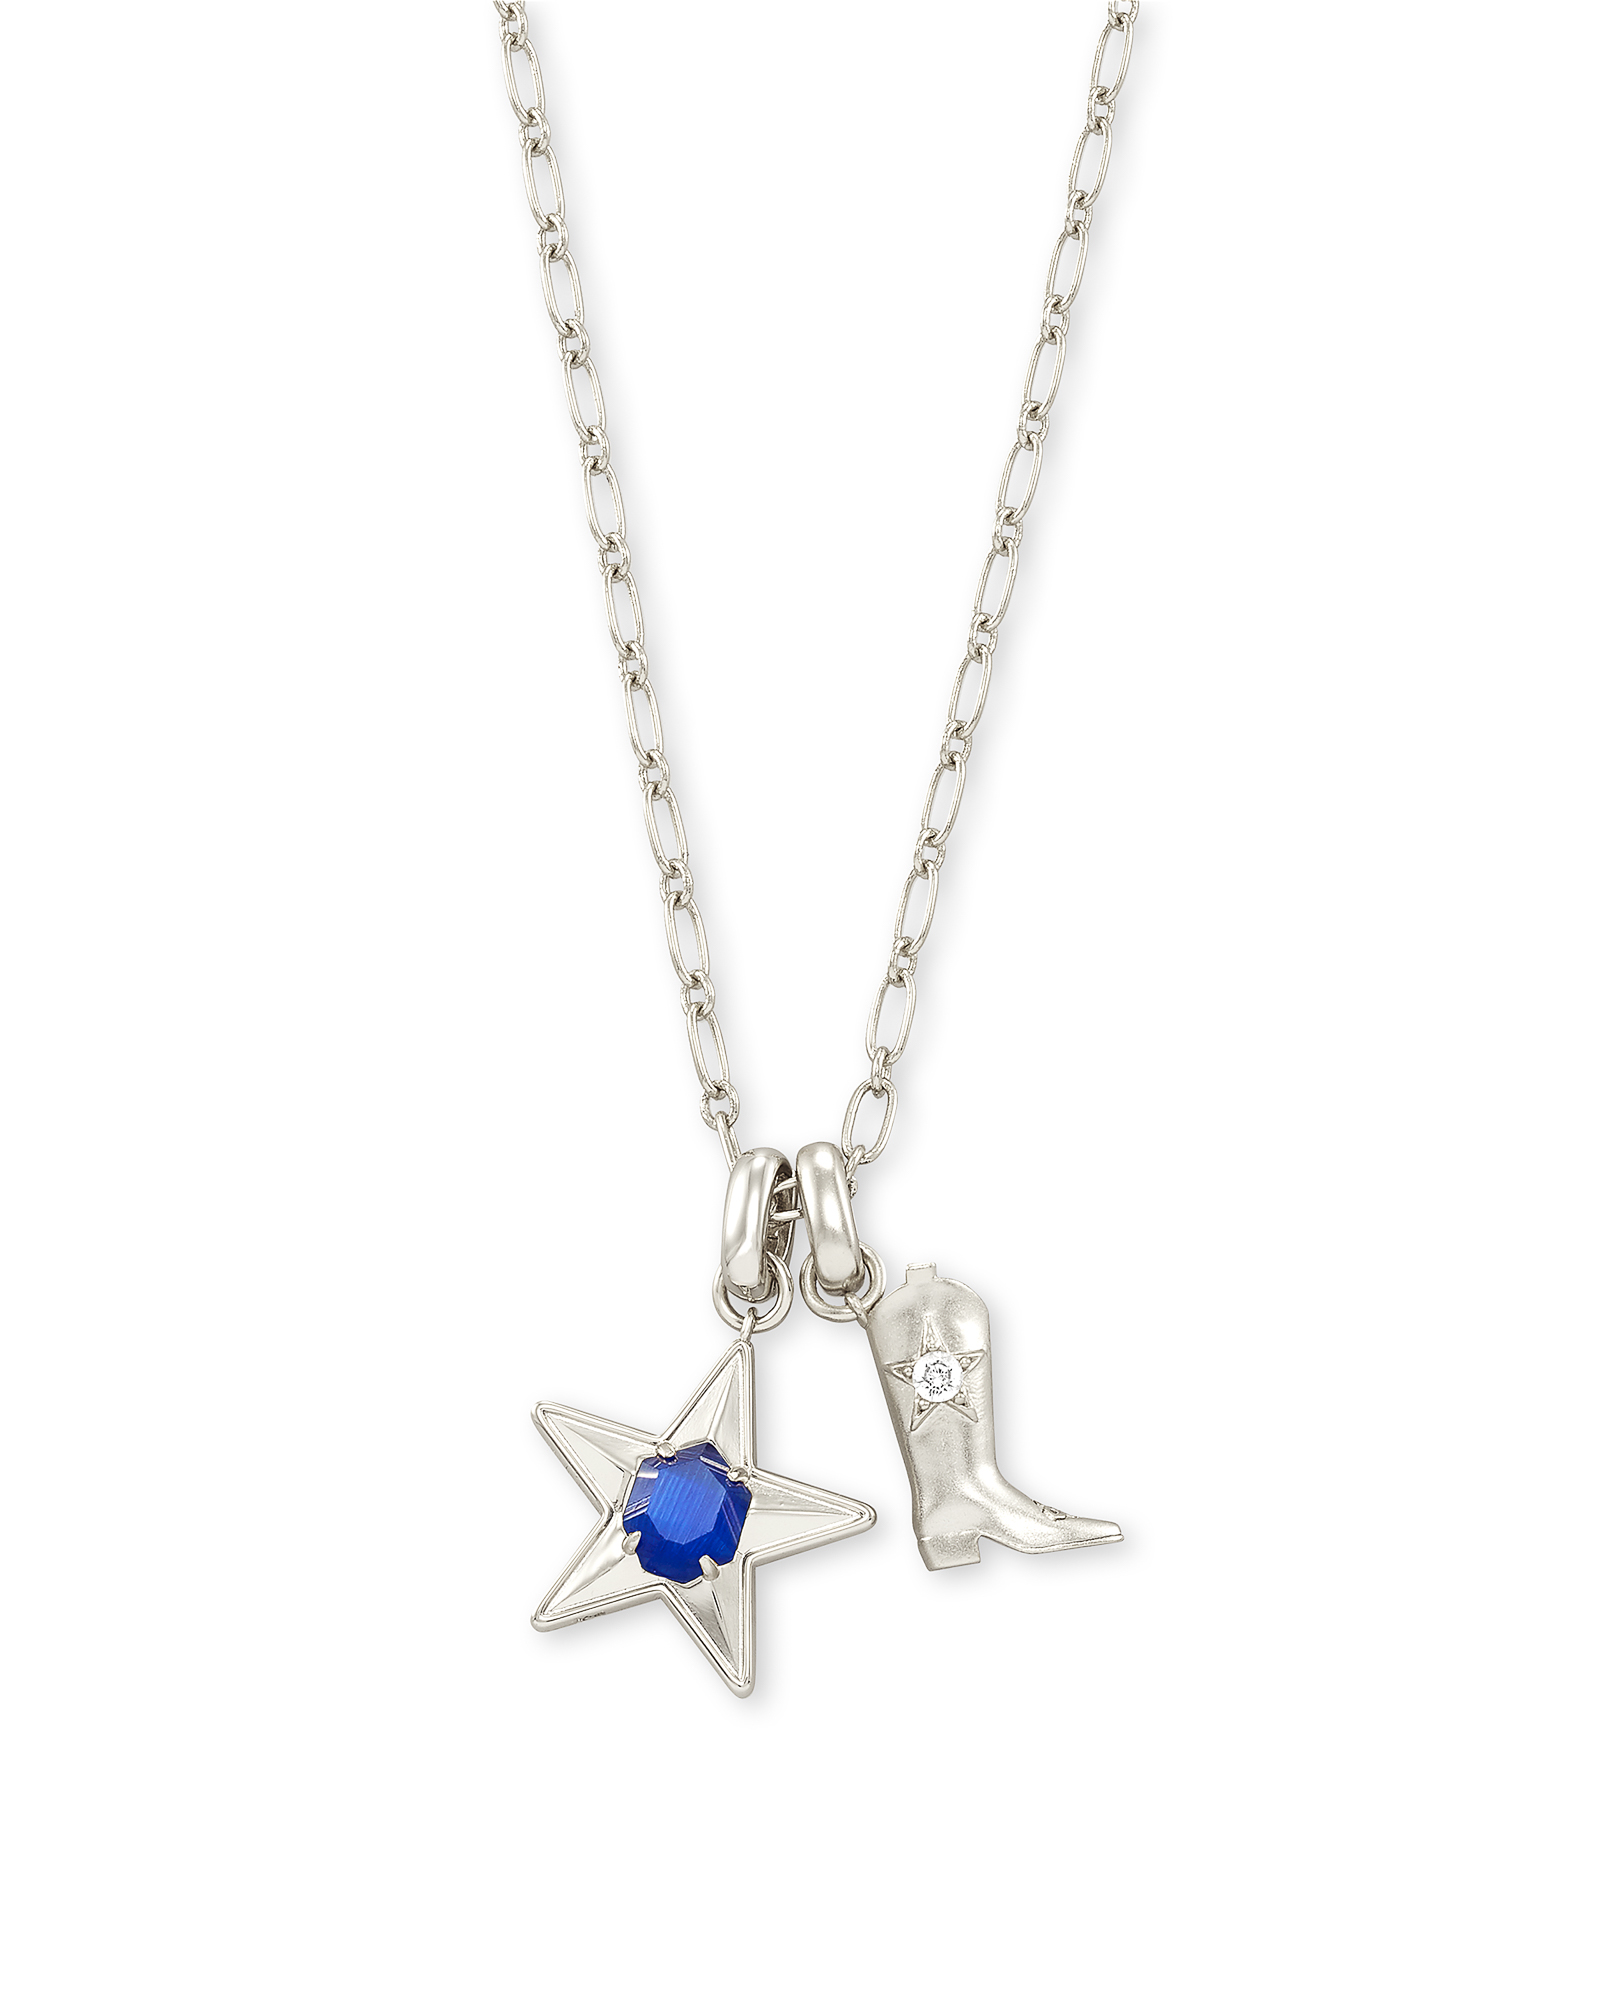 Dallas Cowboys 20 Fan Necklace Silver Mens Womens And Pendant